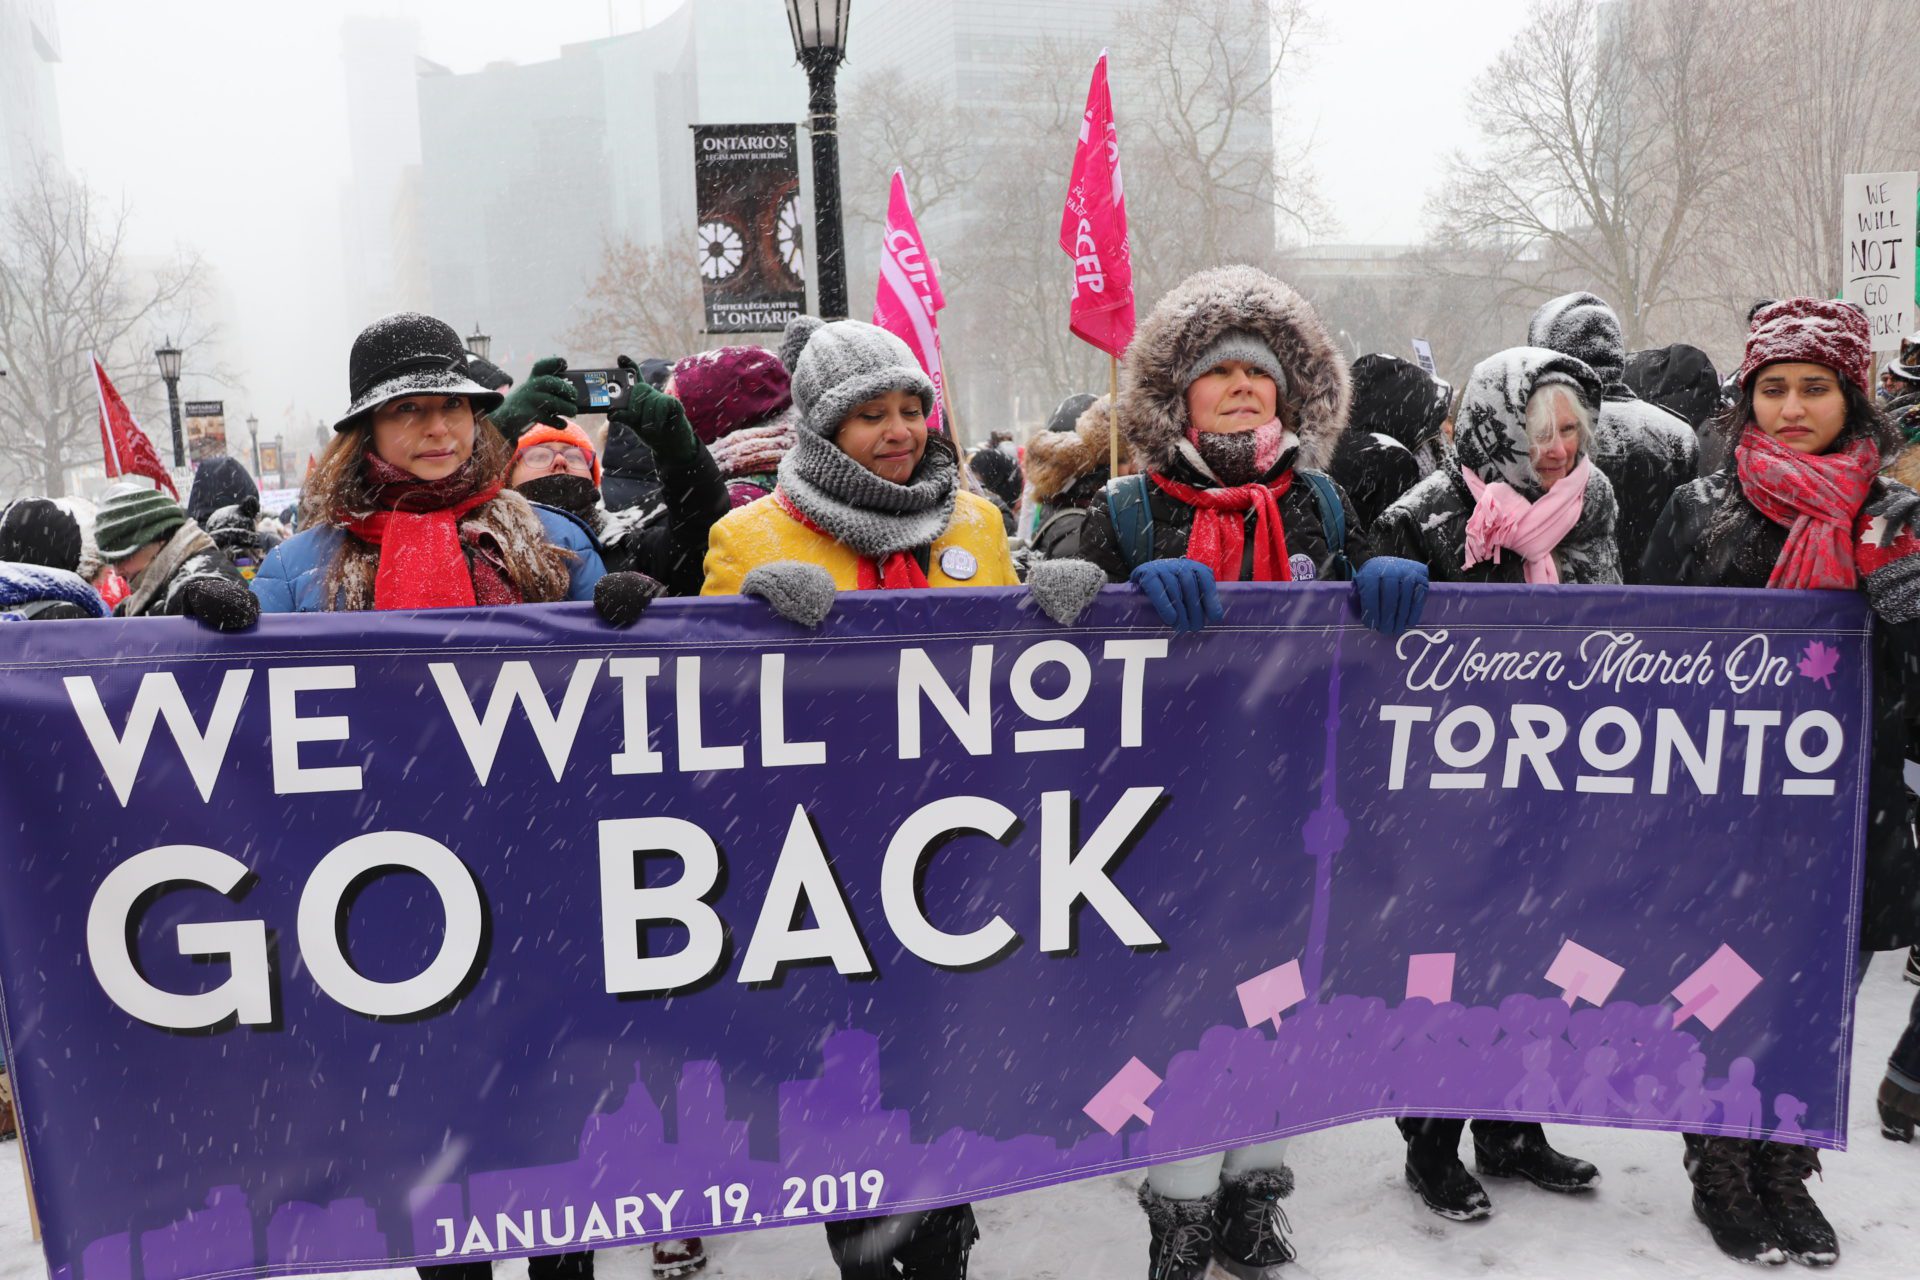 Women March On: Toronto